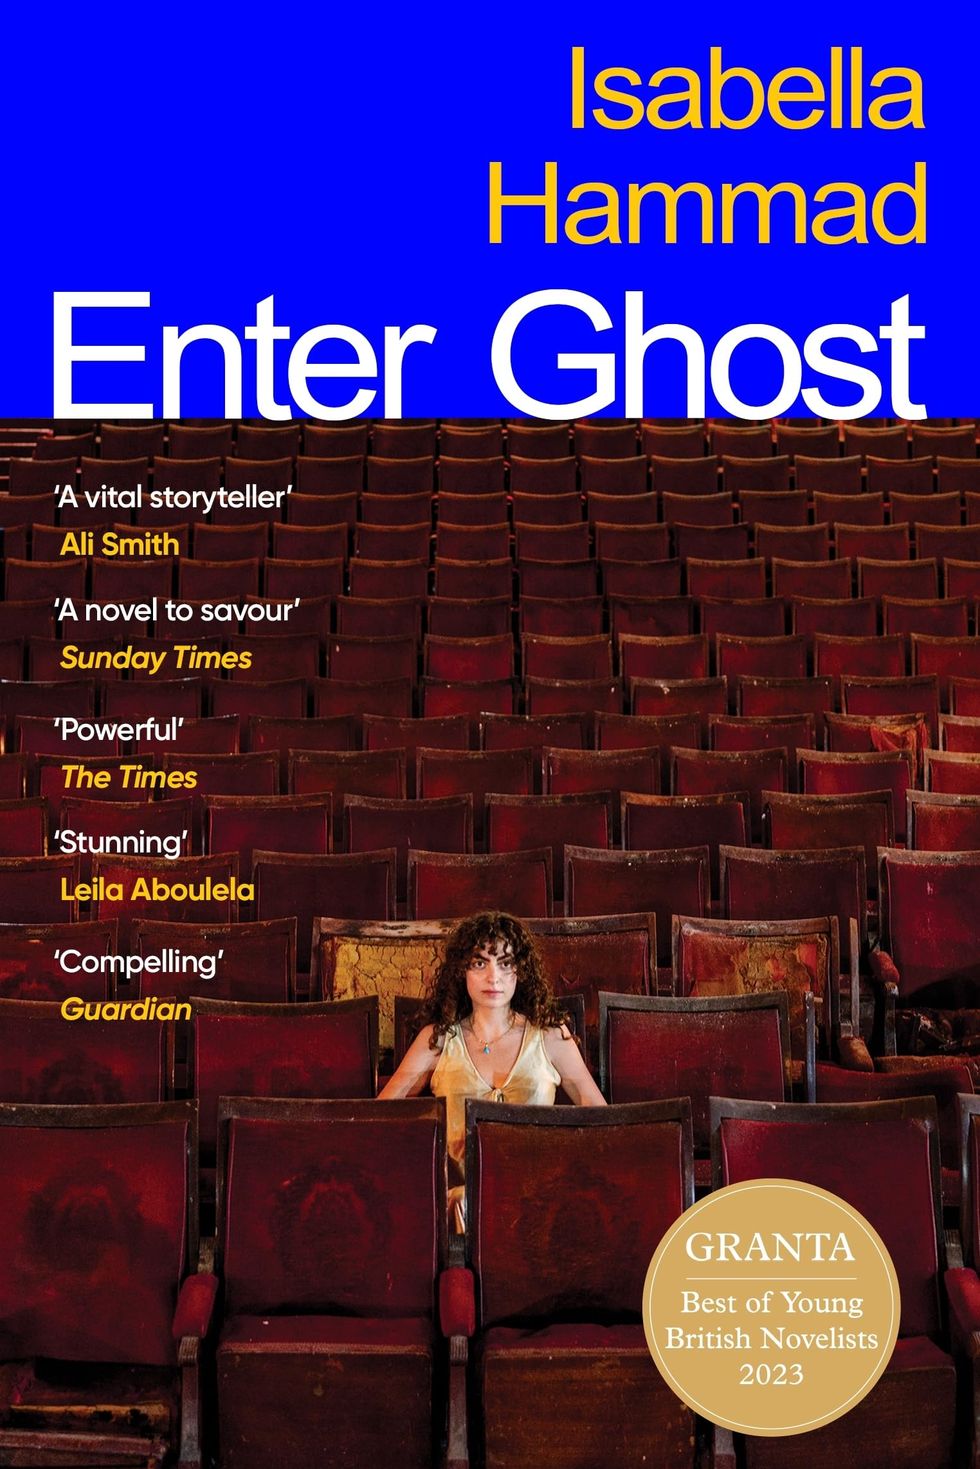 Isabella Hammad, 'Enter Ghost'